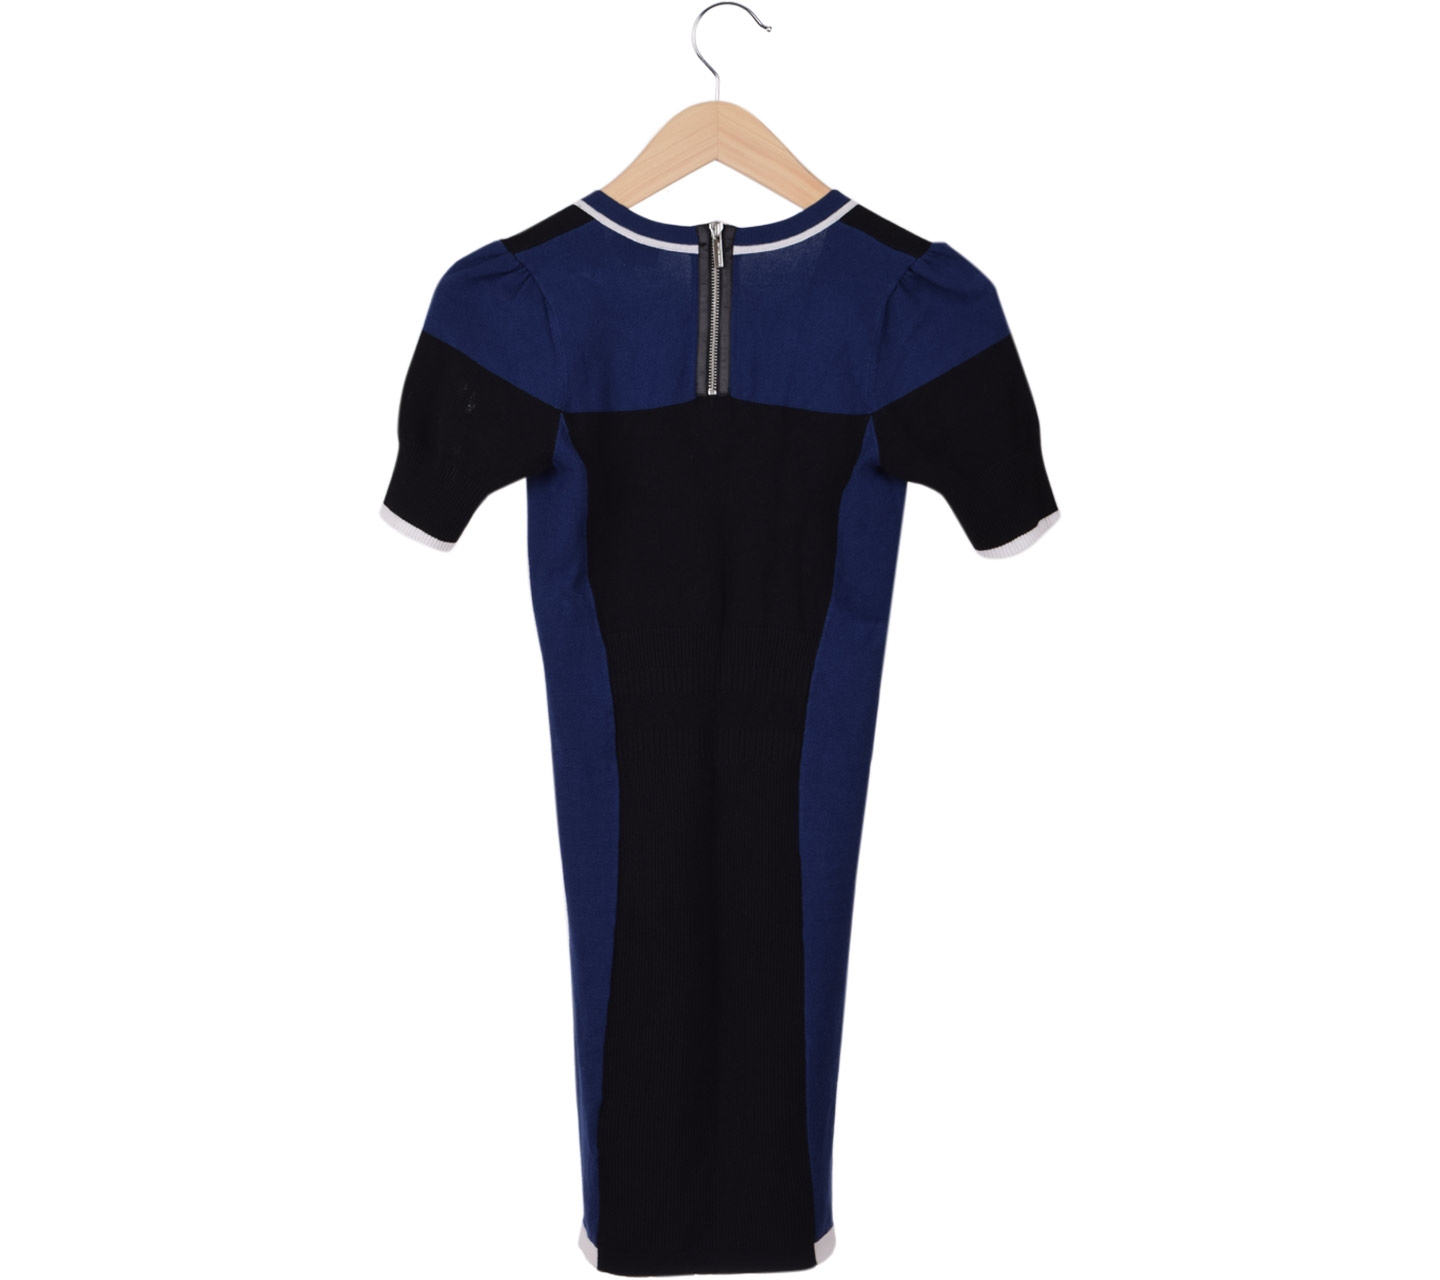 Karen Millen Blue And Black Knitted Mini Dress